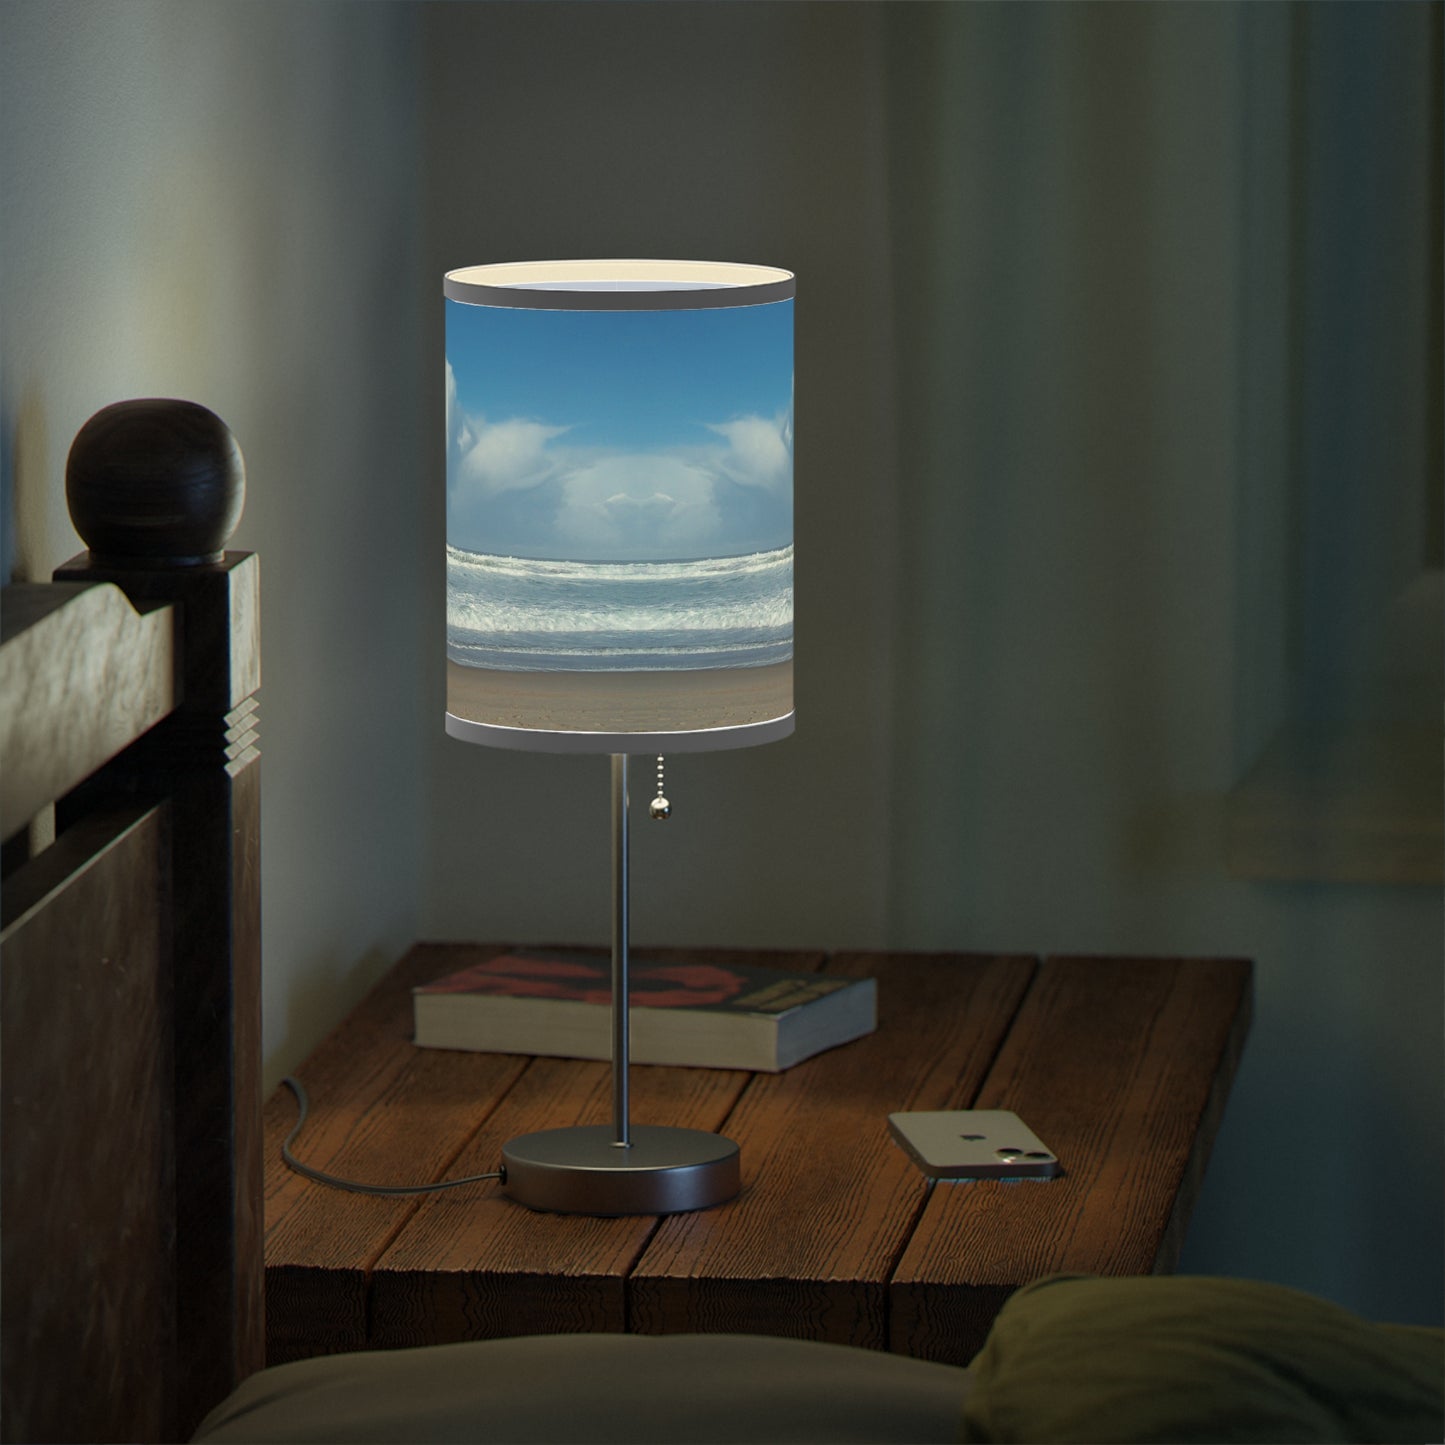 Blue Sky Beach Lamp on a Stand